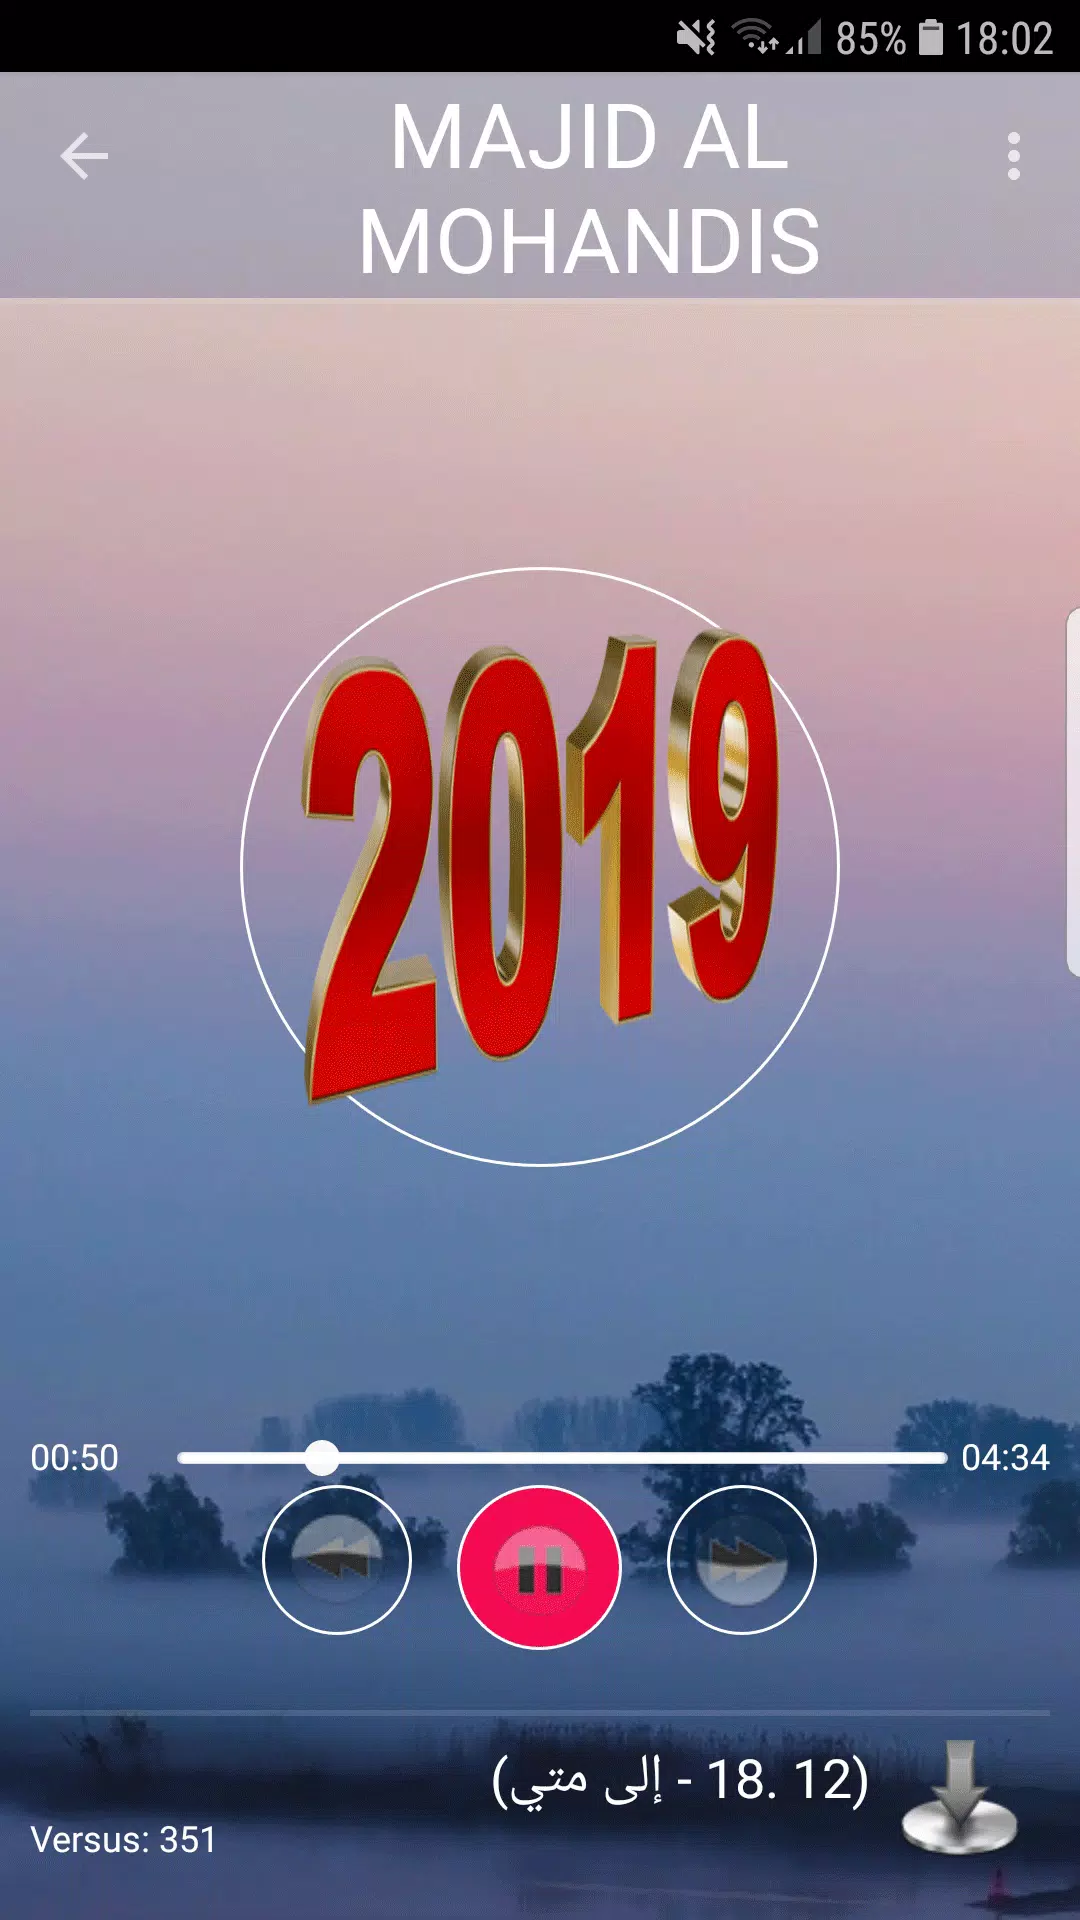 اغاني ماجد المهندس 2019 majid al mohandis‎ MP3 APK for Android Download